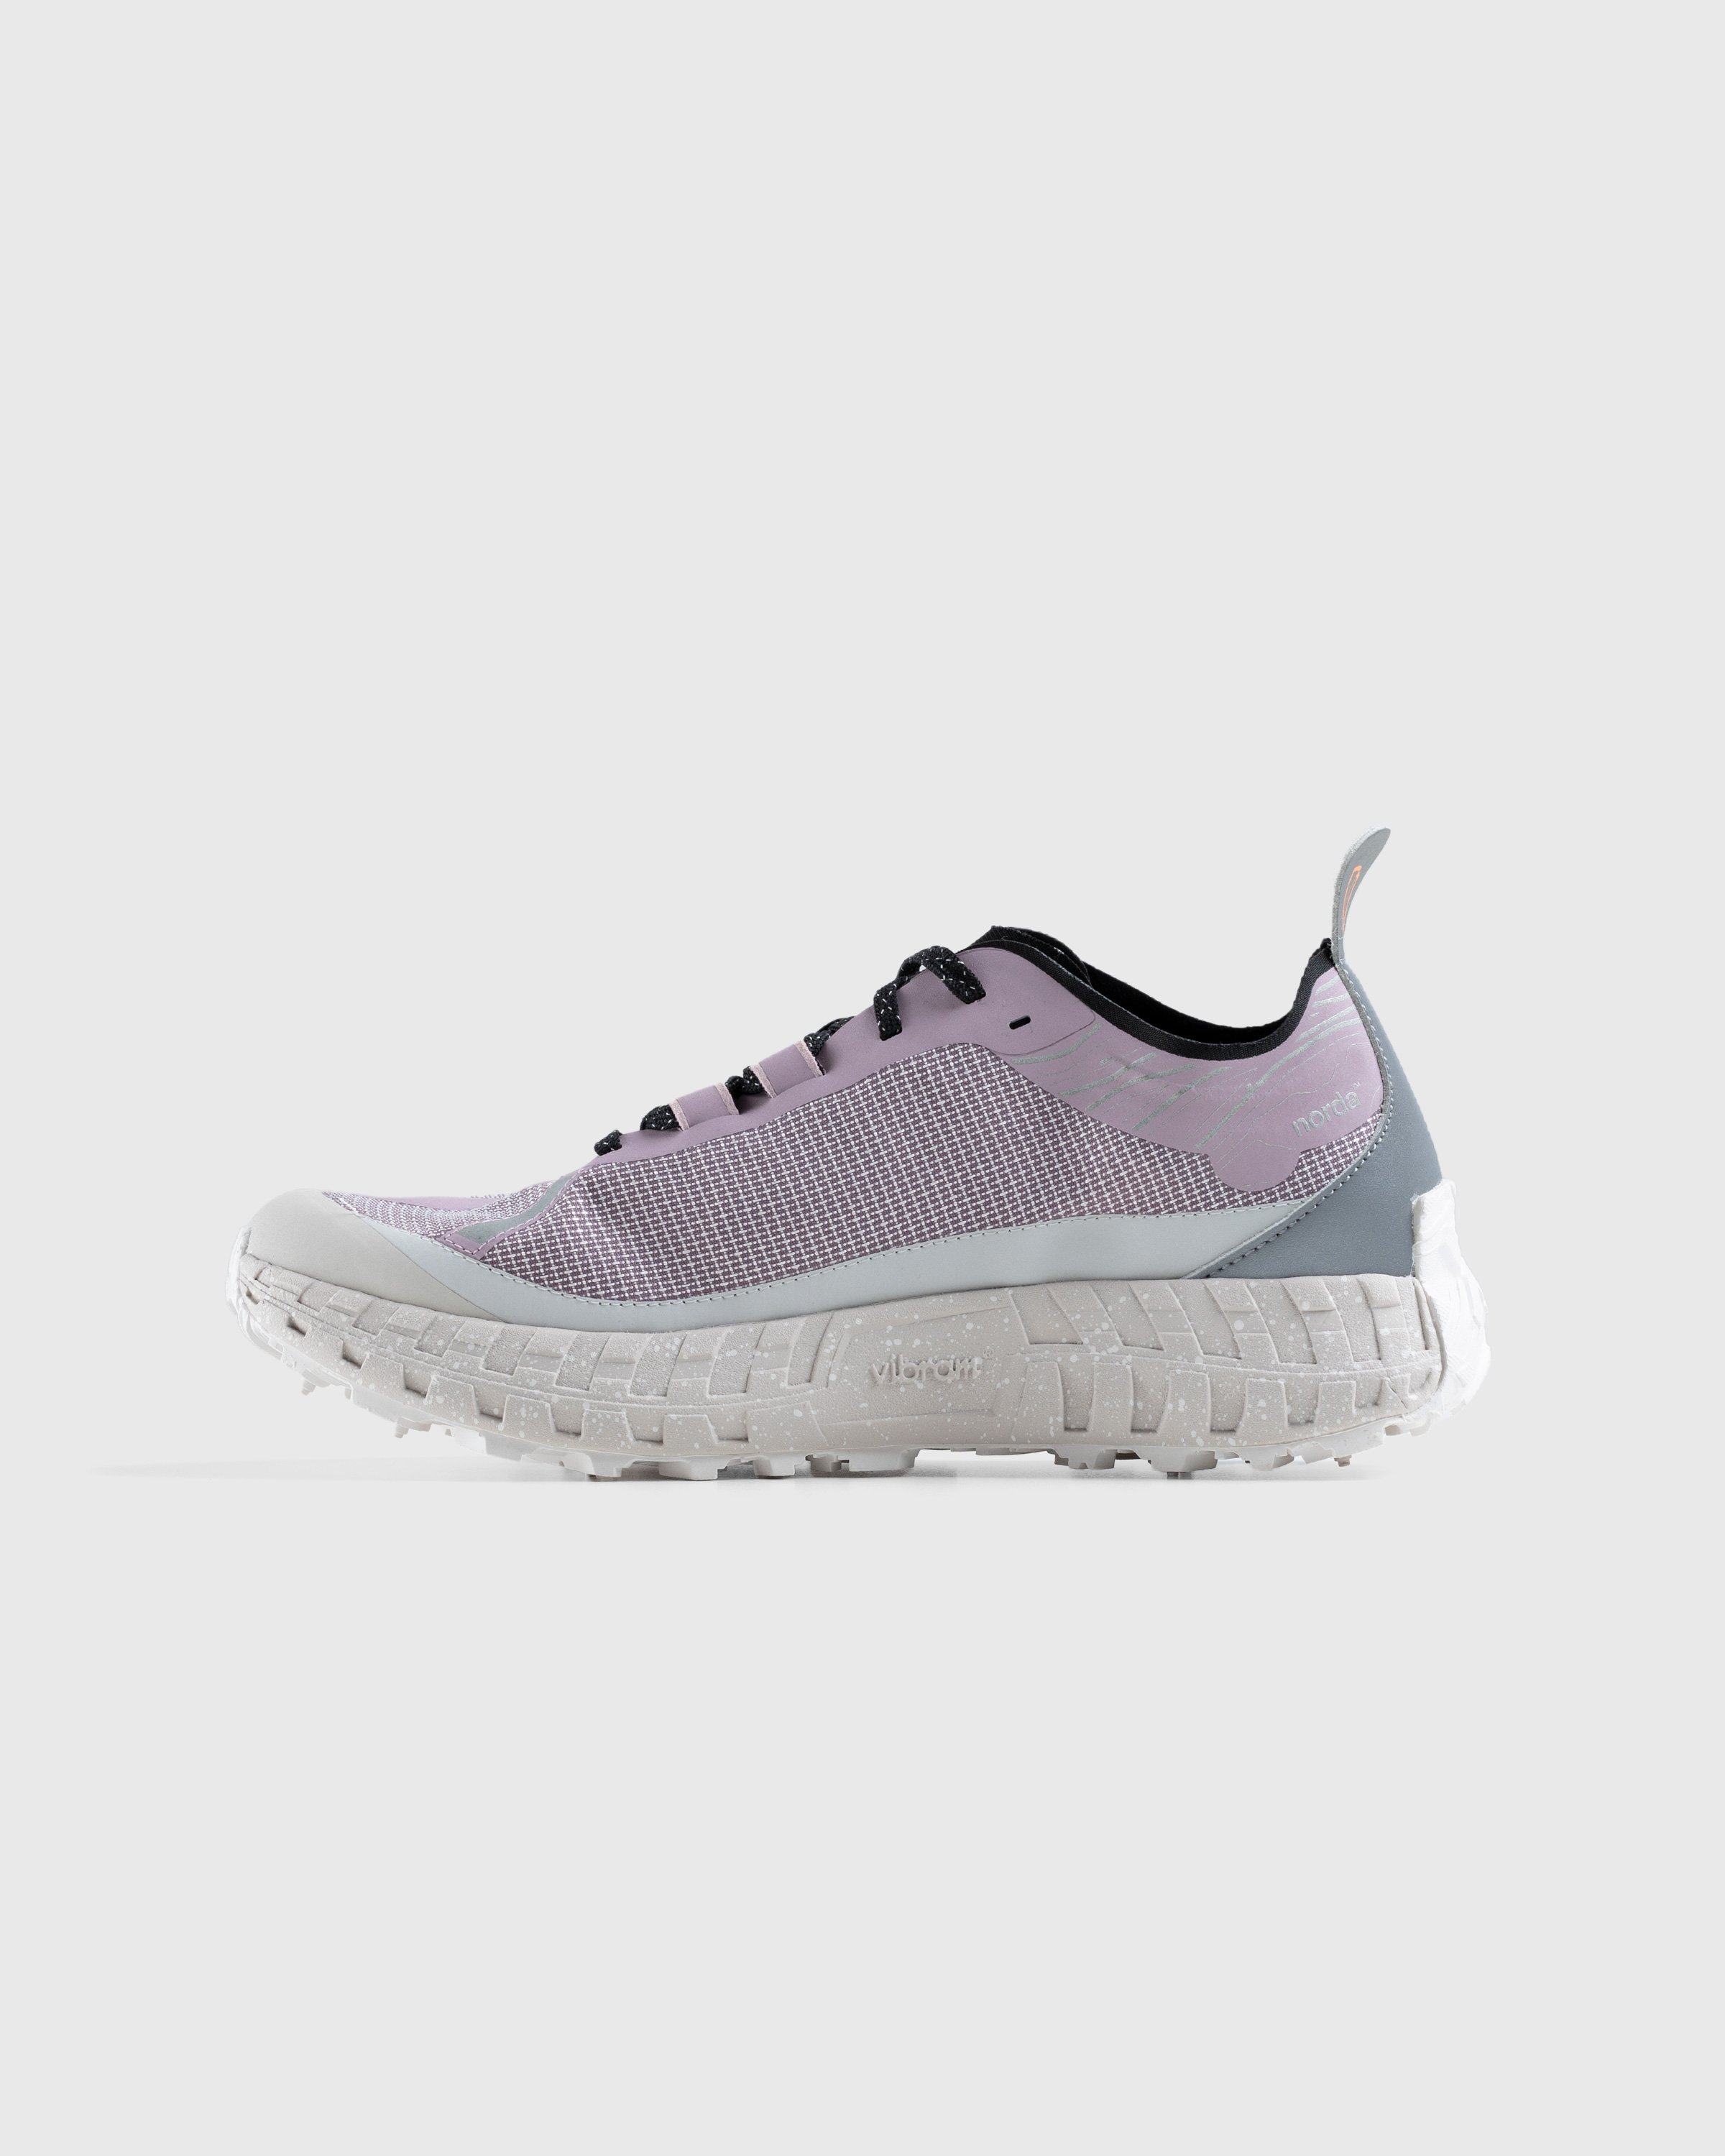 Norda - 001 W LTD Edition Lilac - Footwear - Purple - Image 2